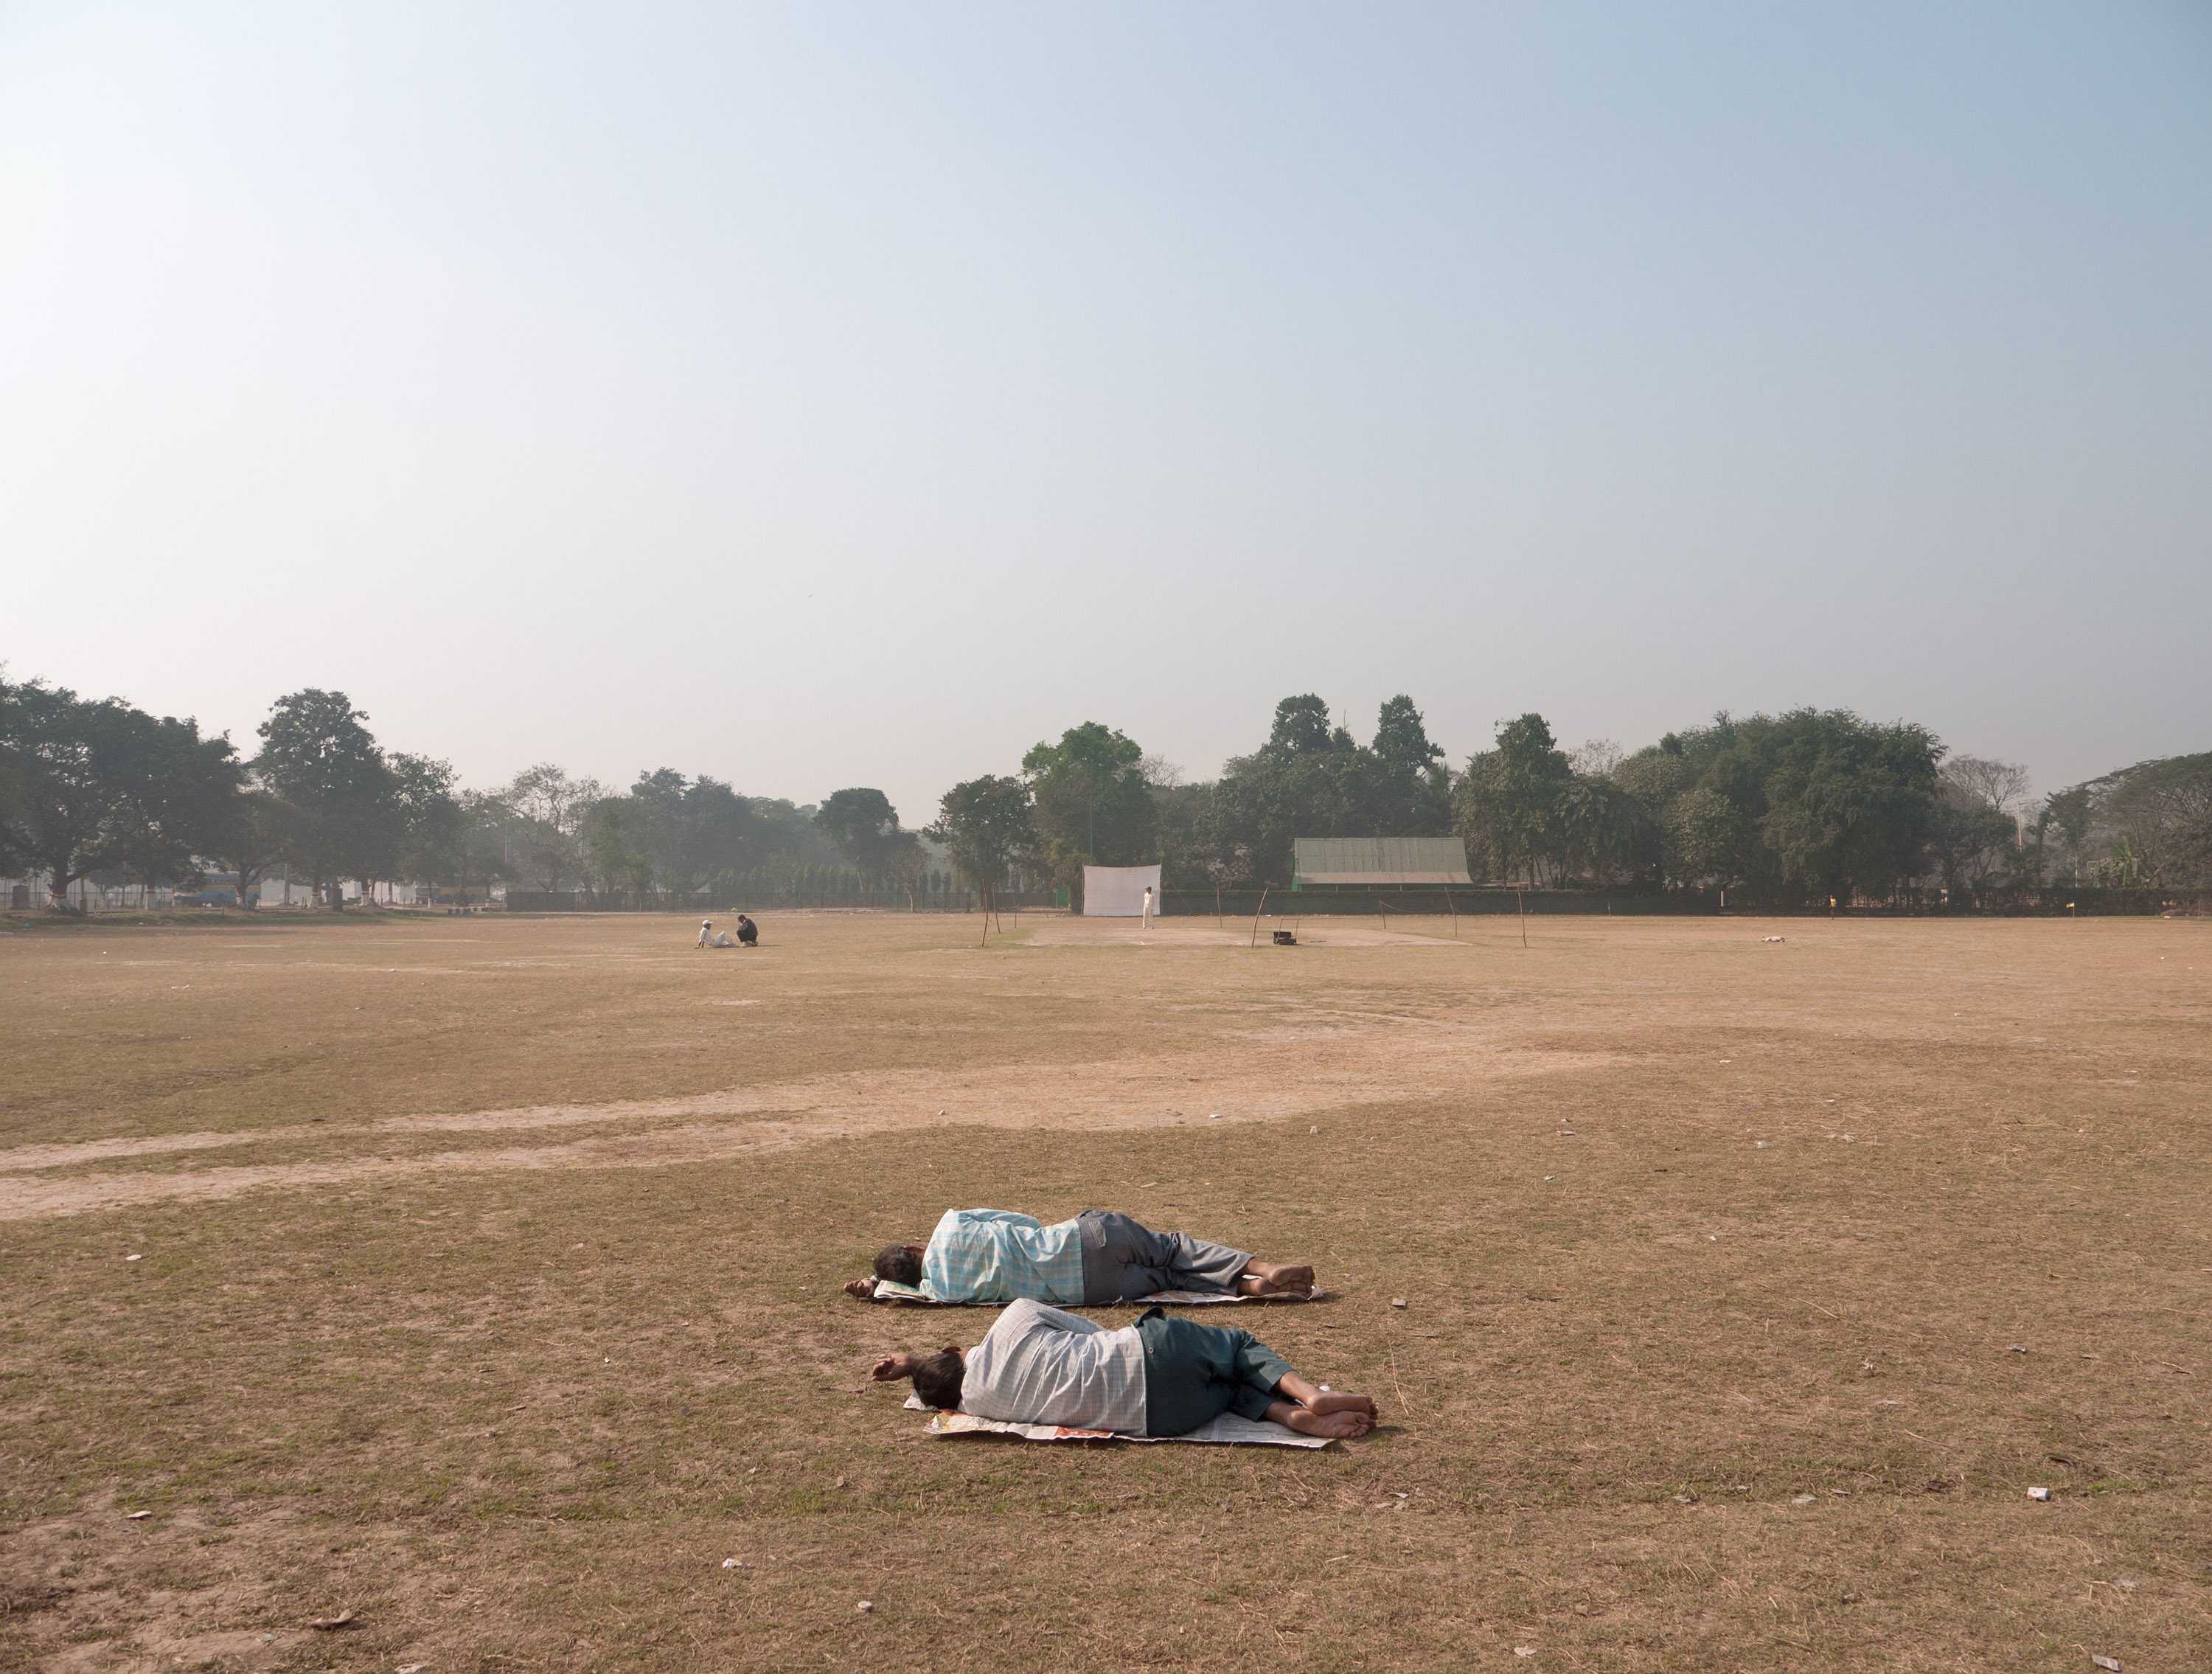 Alan Thomas, Sleeping on the Maidan, Calcutta, 2011